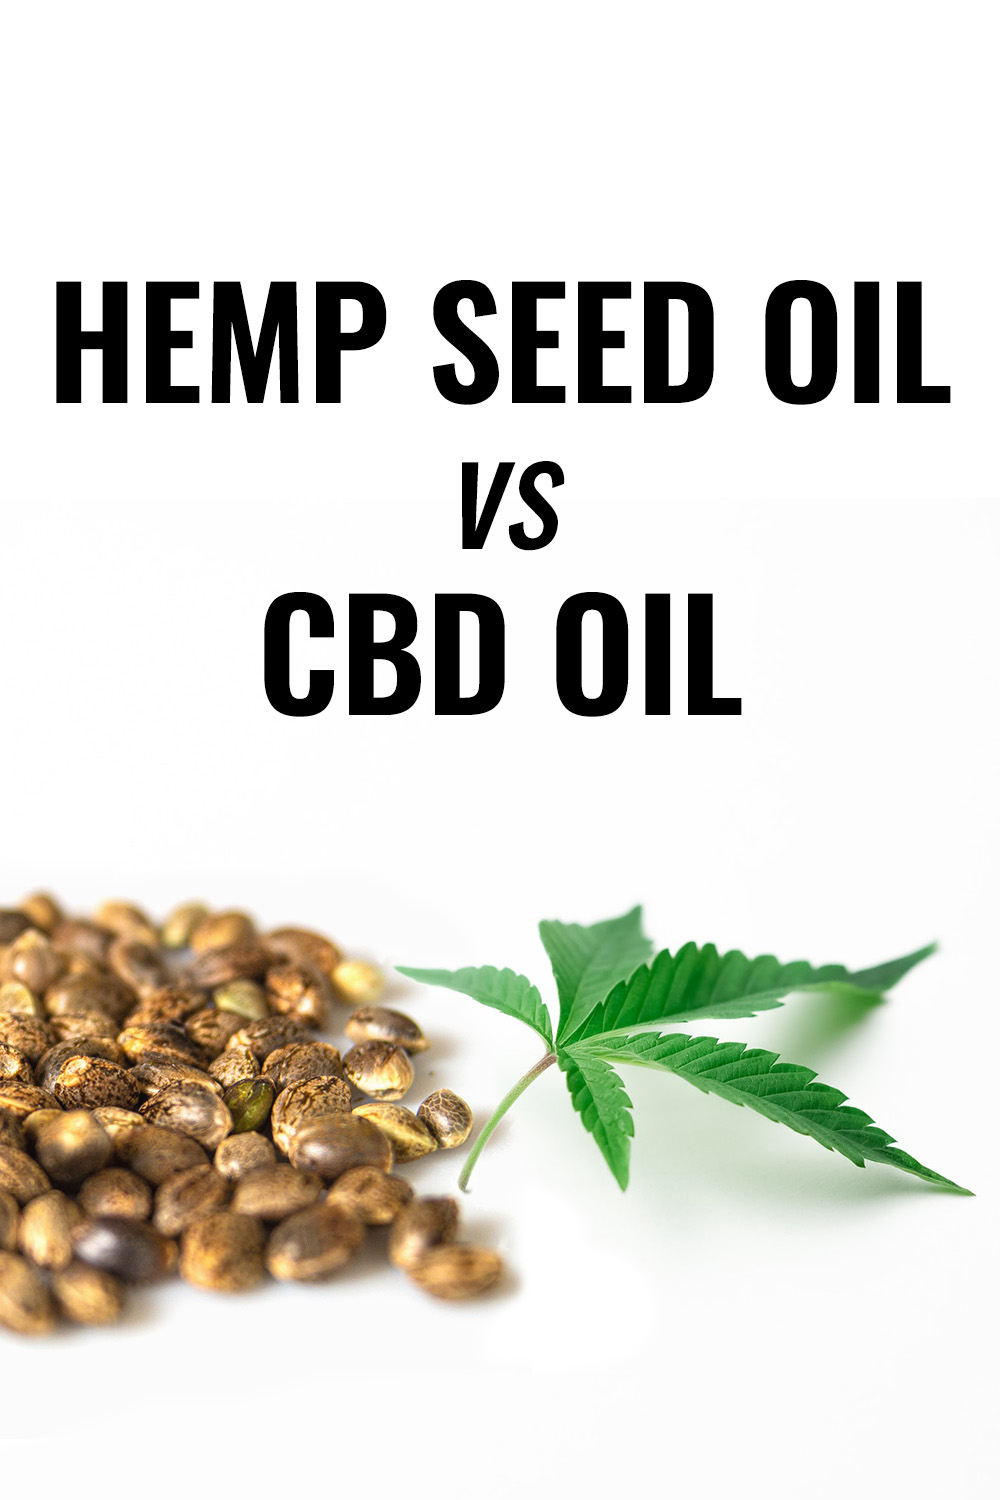 Hemp seed oil vs CBD oil